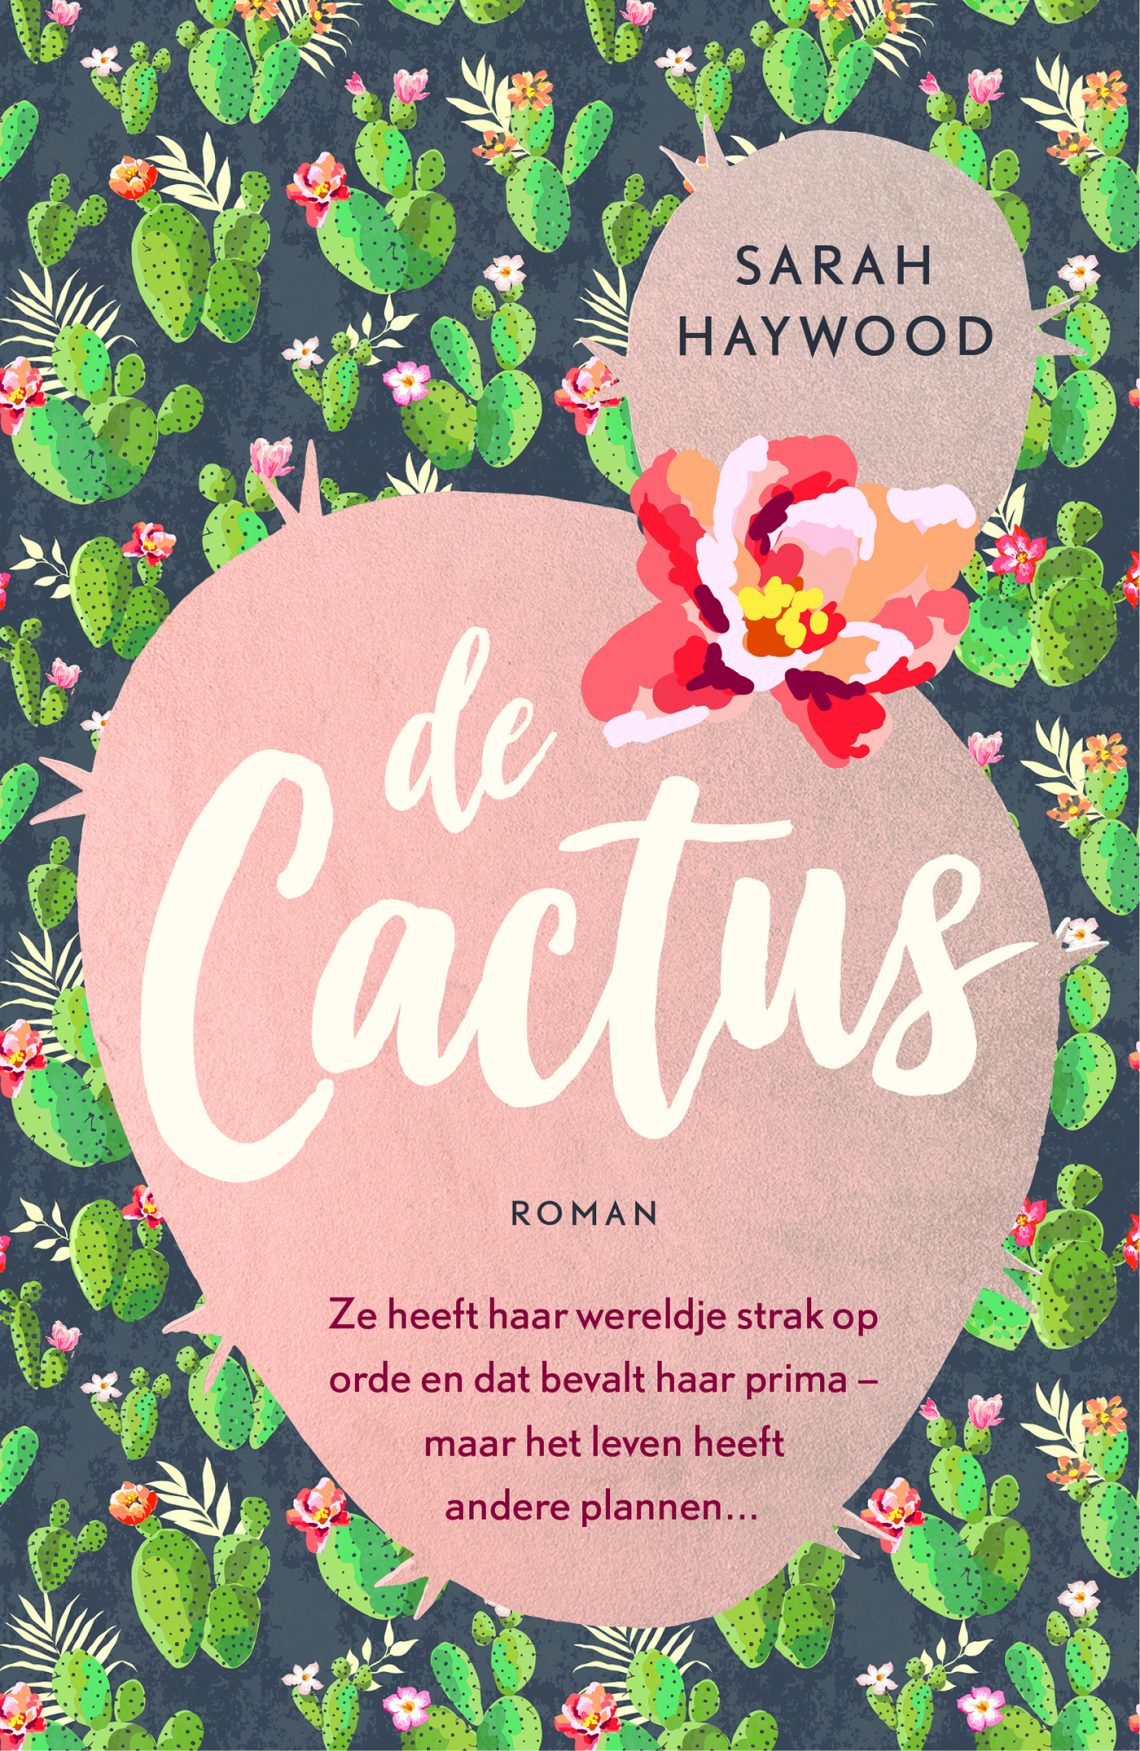 Sarah Haywood - De cactus